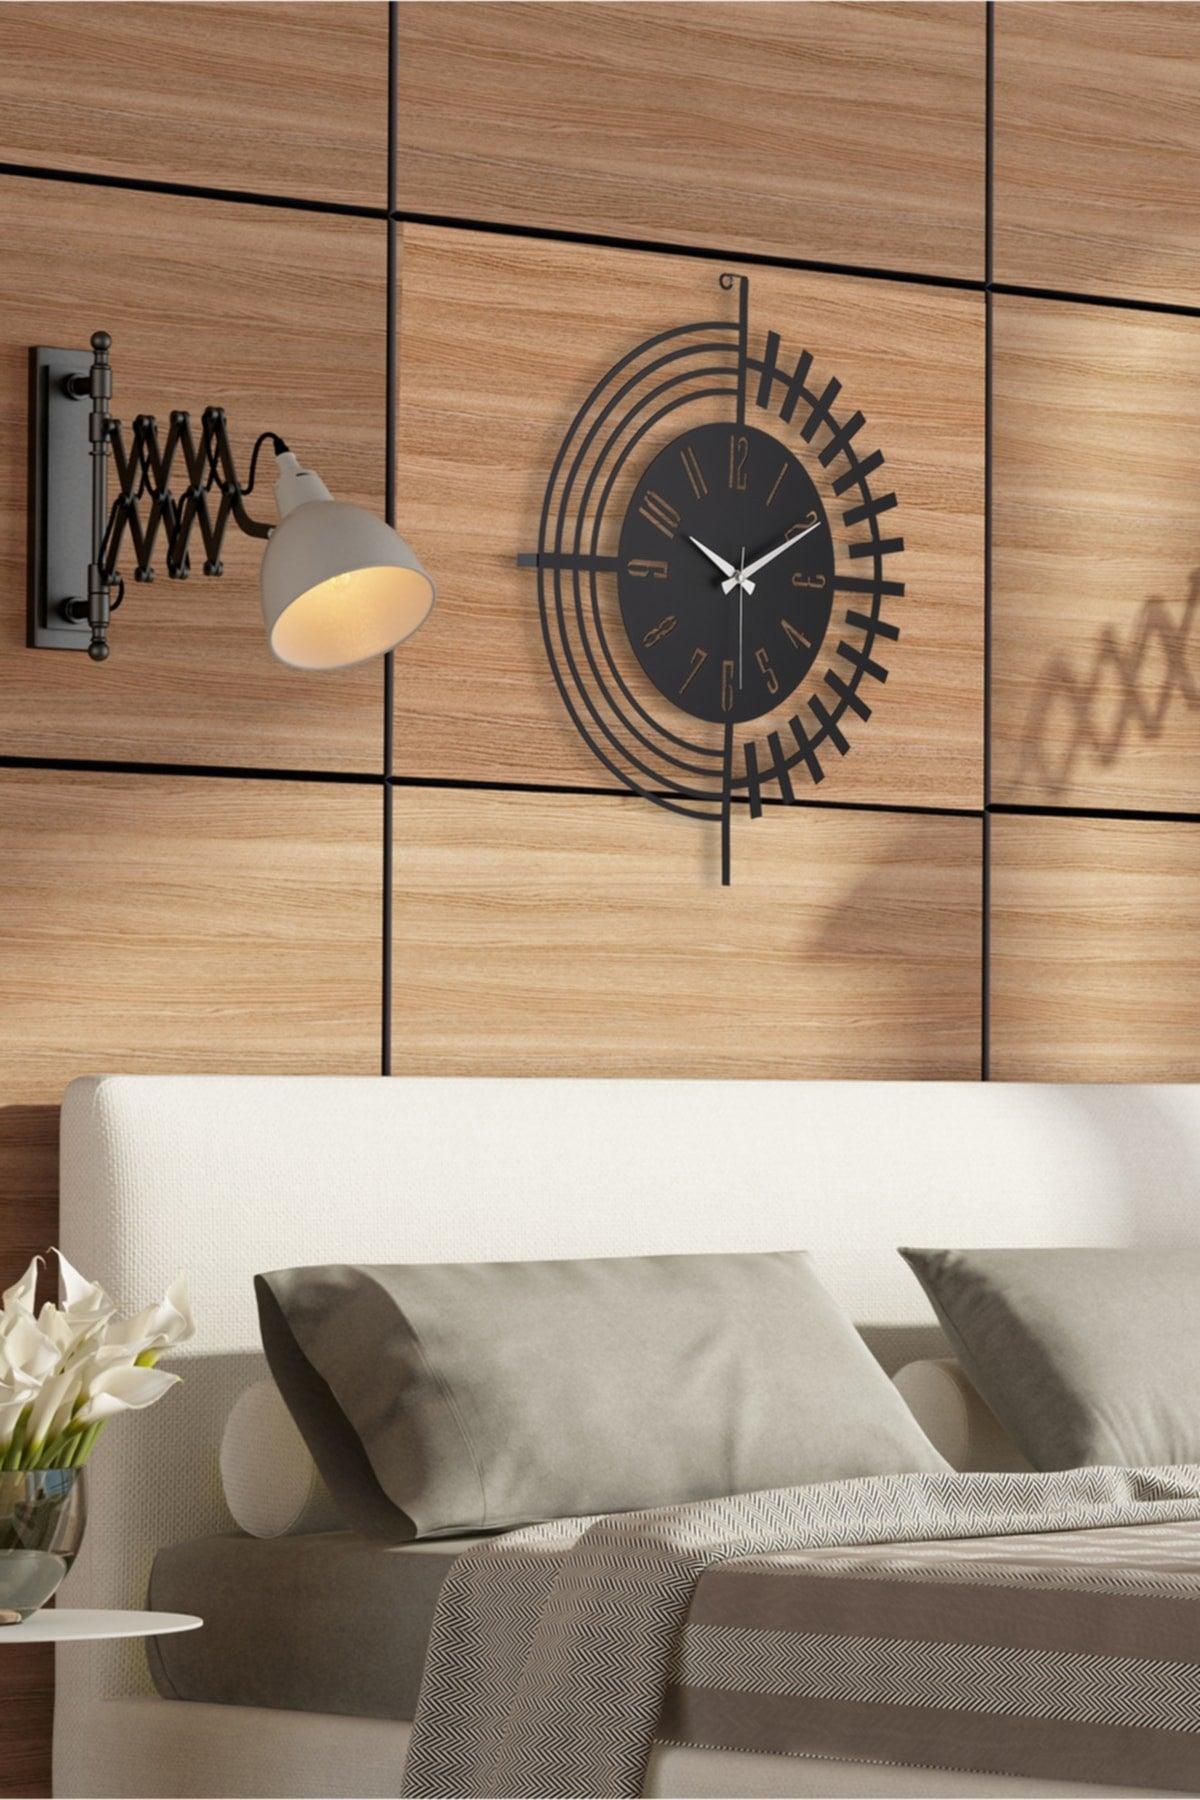 Muyika Dubai Metal Black Wall Clock 50x50cm Silent Mechanism Mds-50 - Swordslife